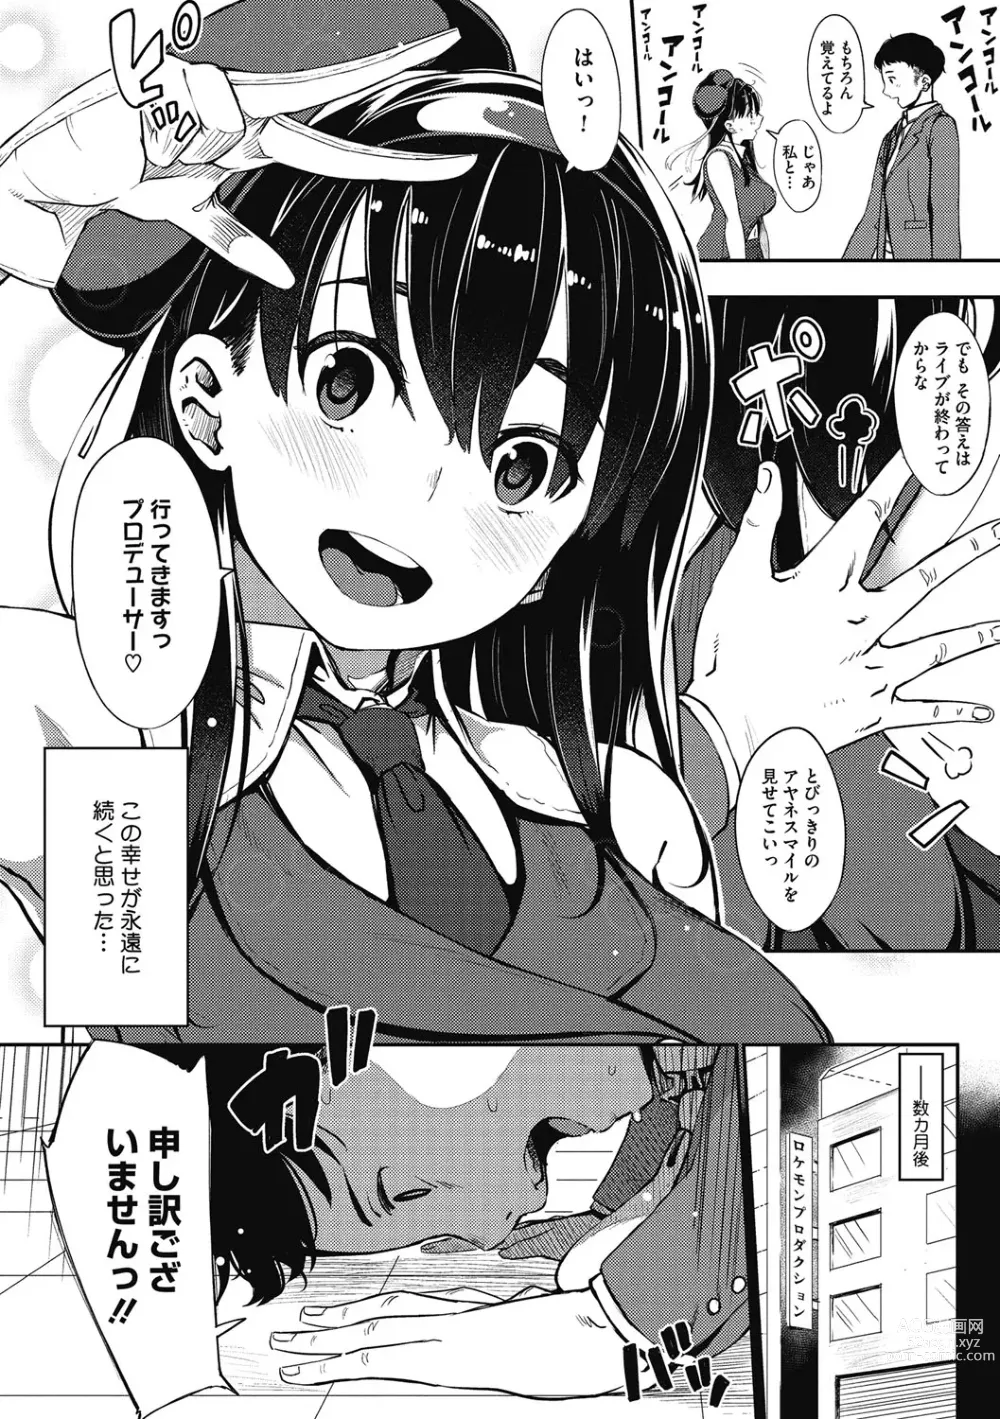 Page 9 of manga Girigiri Idol